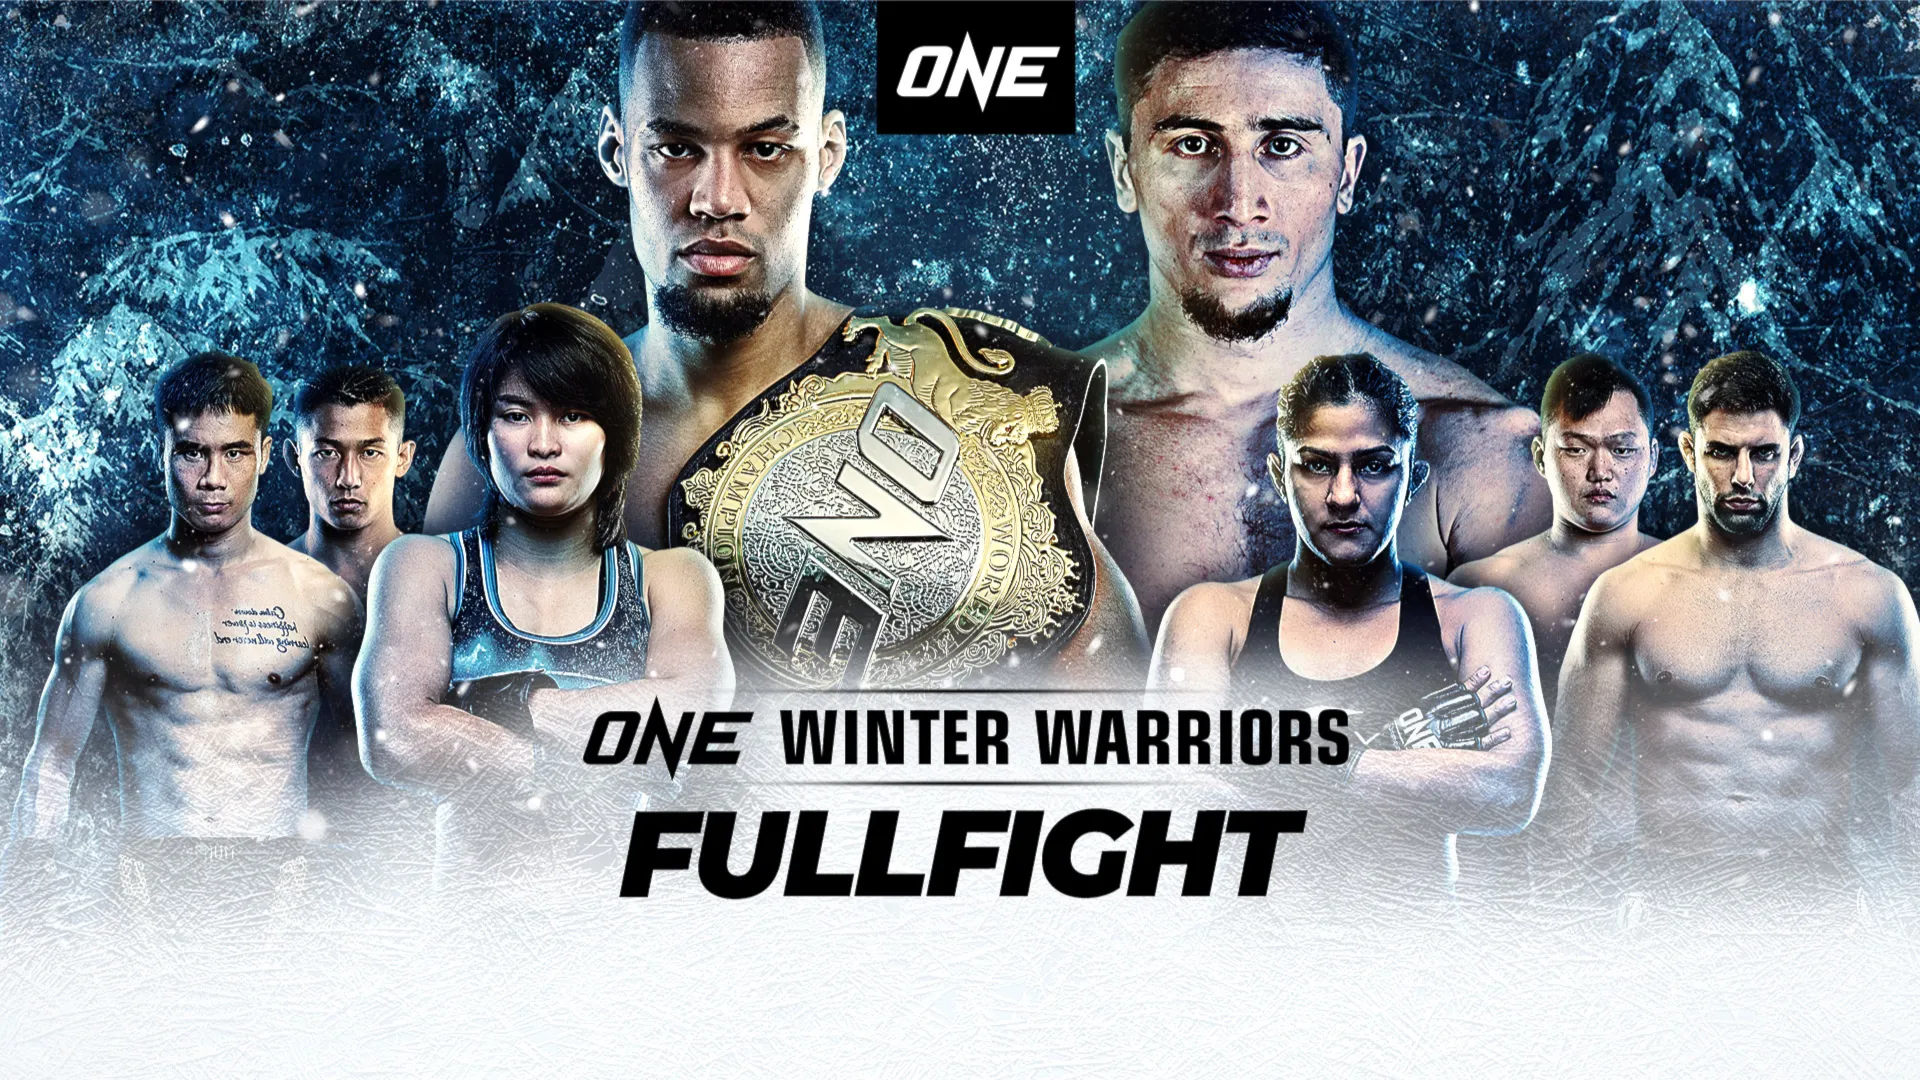 ONE: Winter Warriors - Fullfight